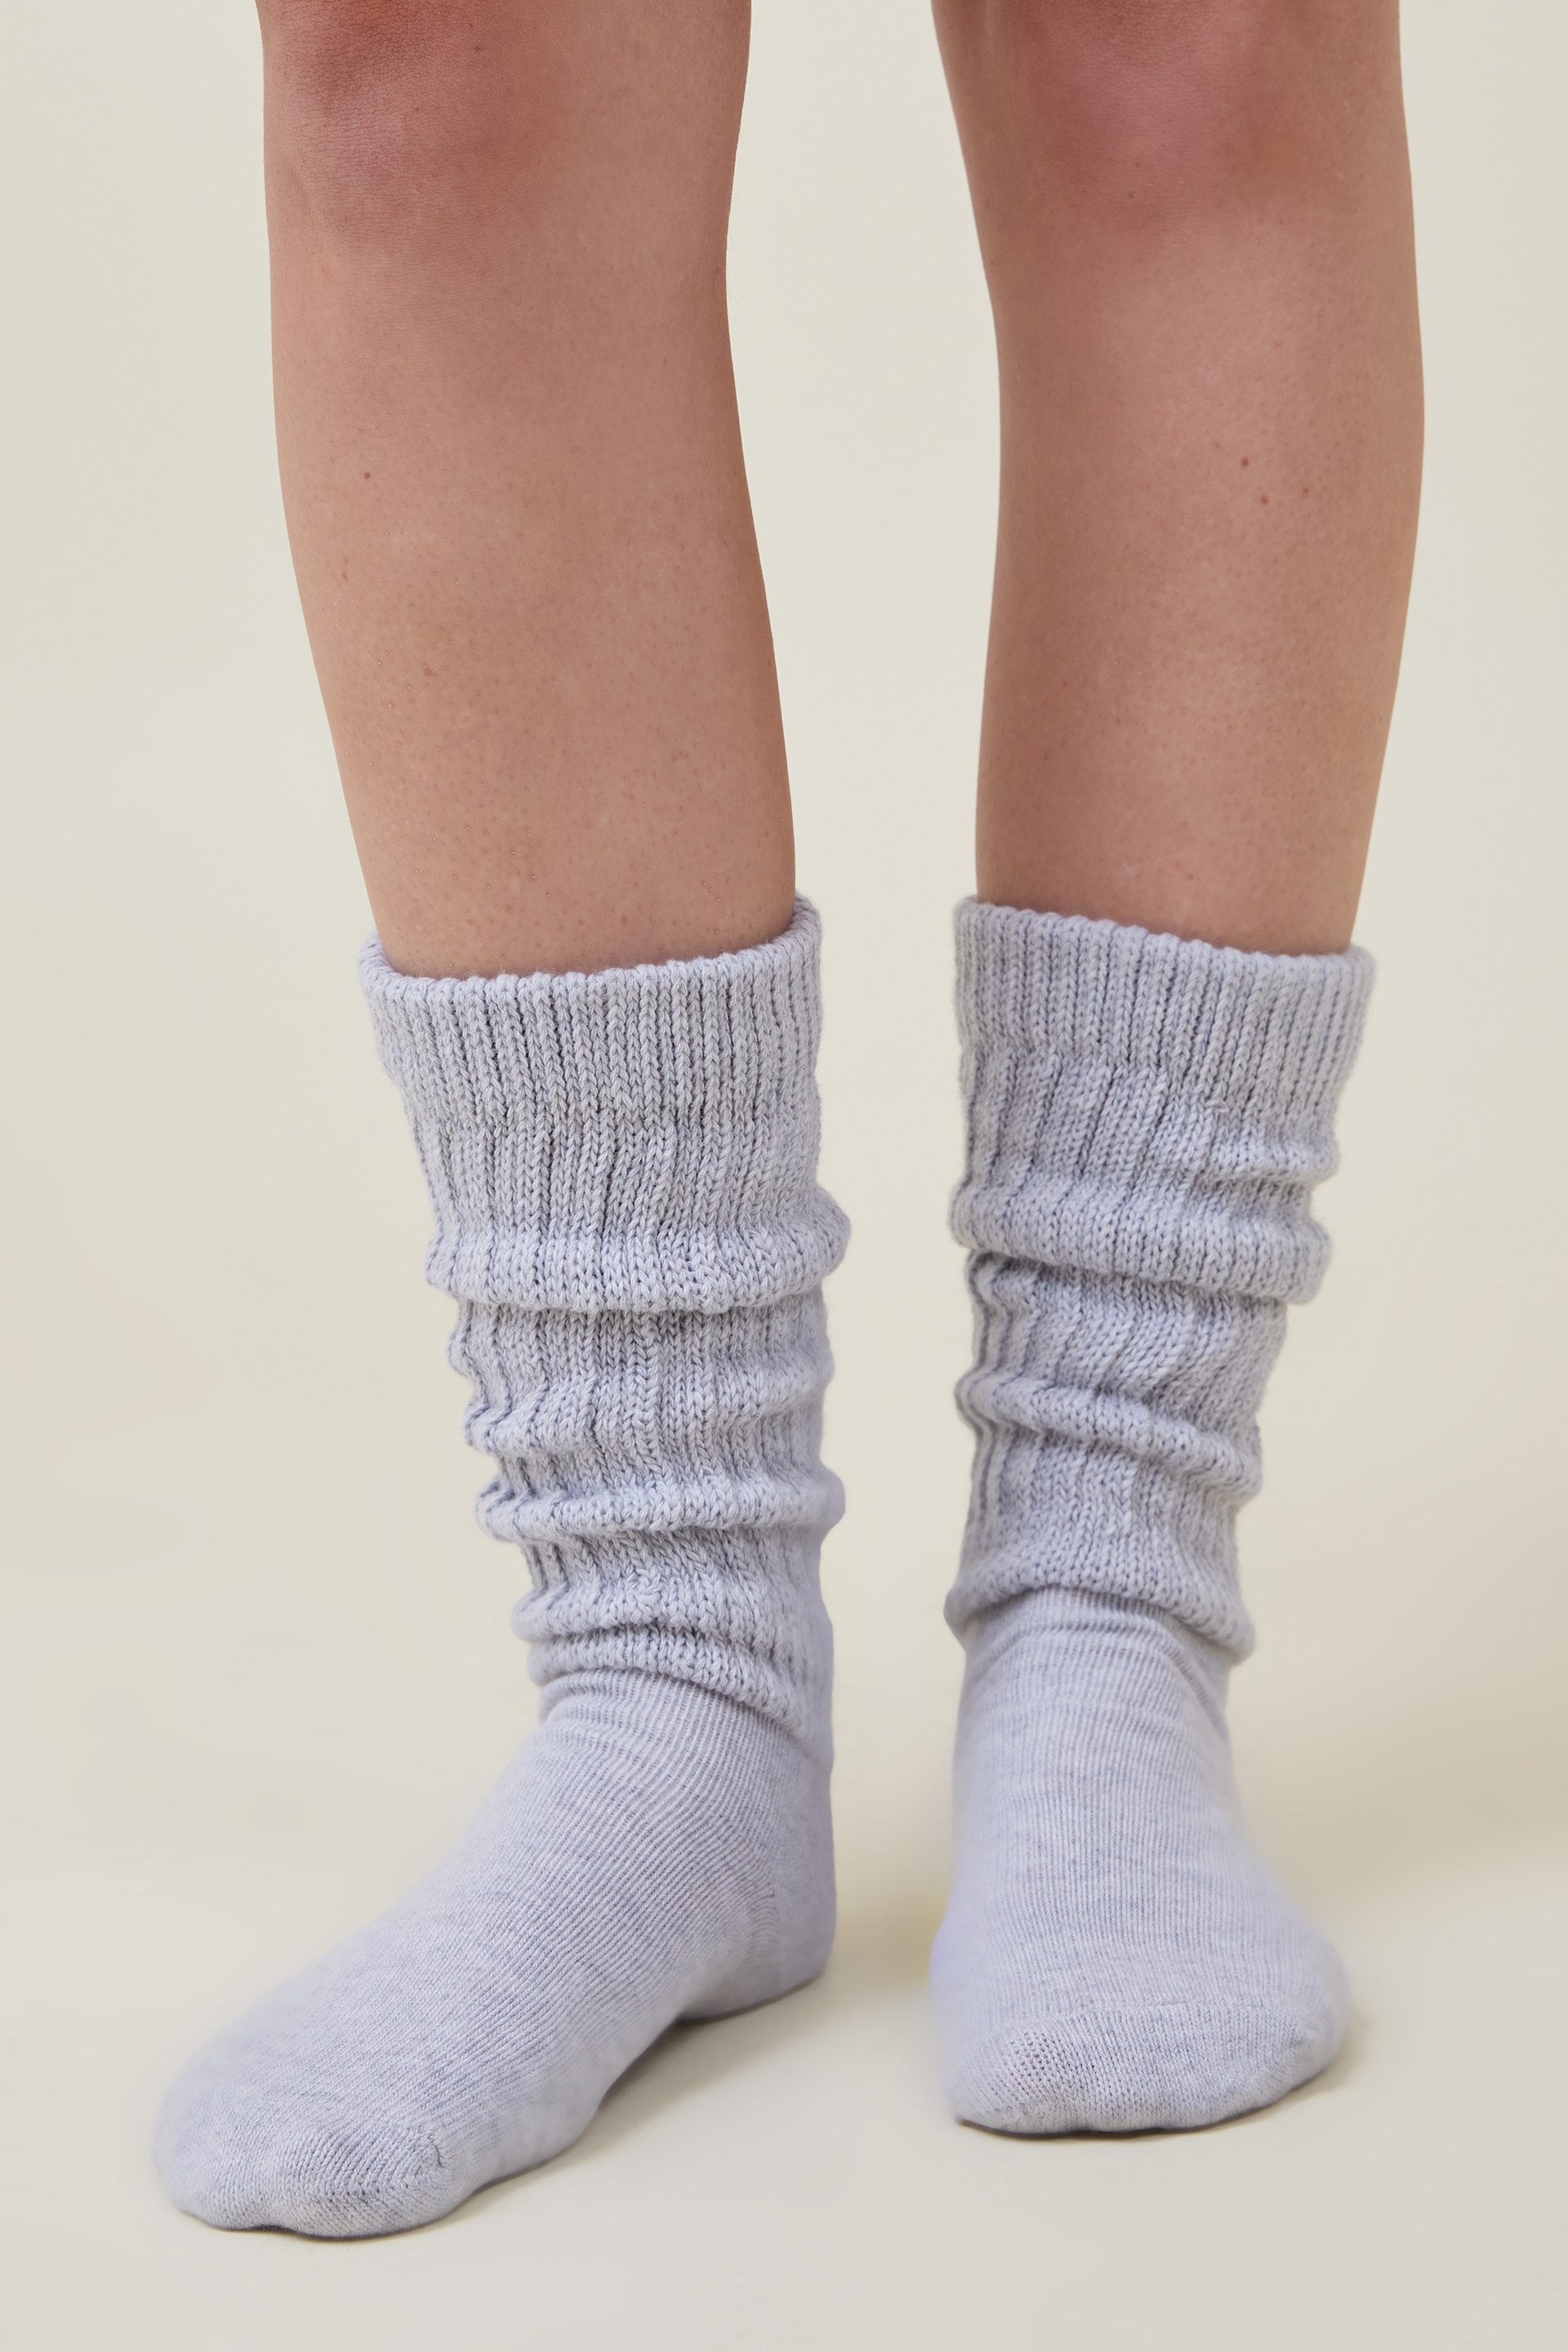 Scrunch Socks in Athletic Heather Grey, Size: Medium/Large